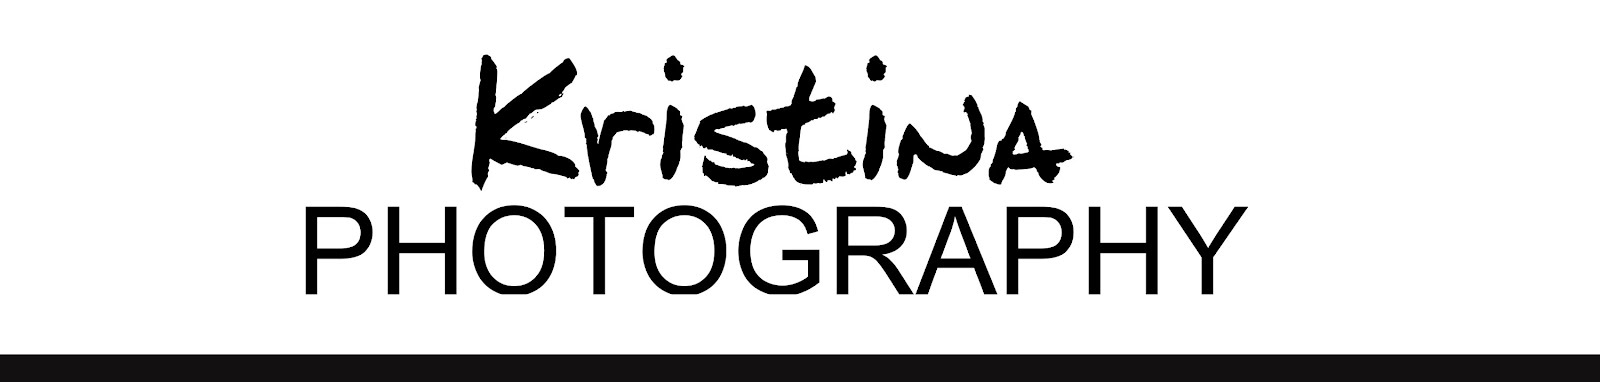 Kristina Photography